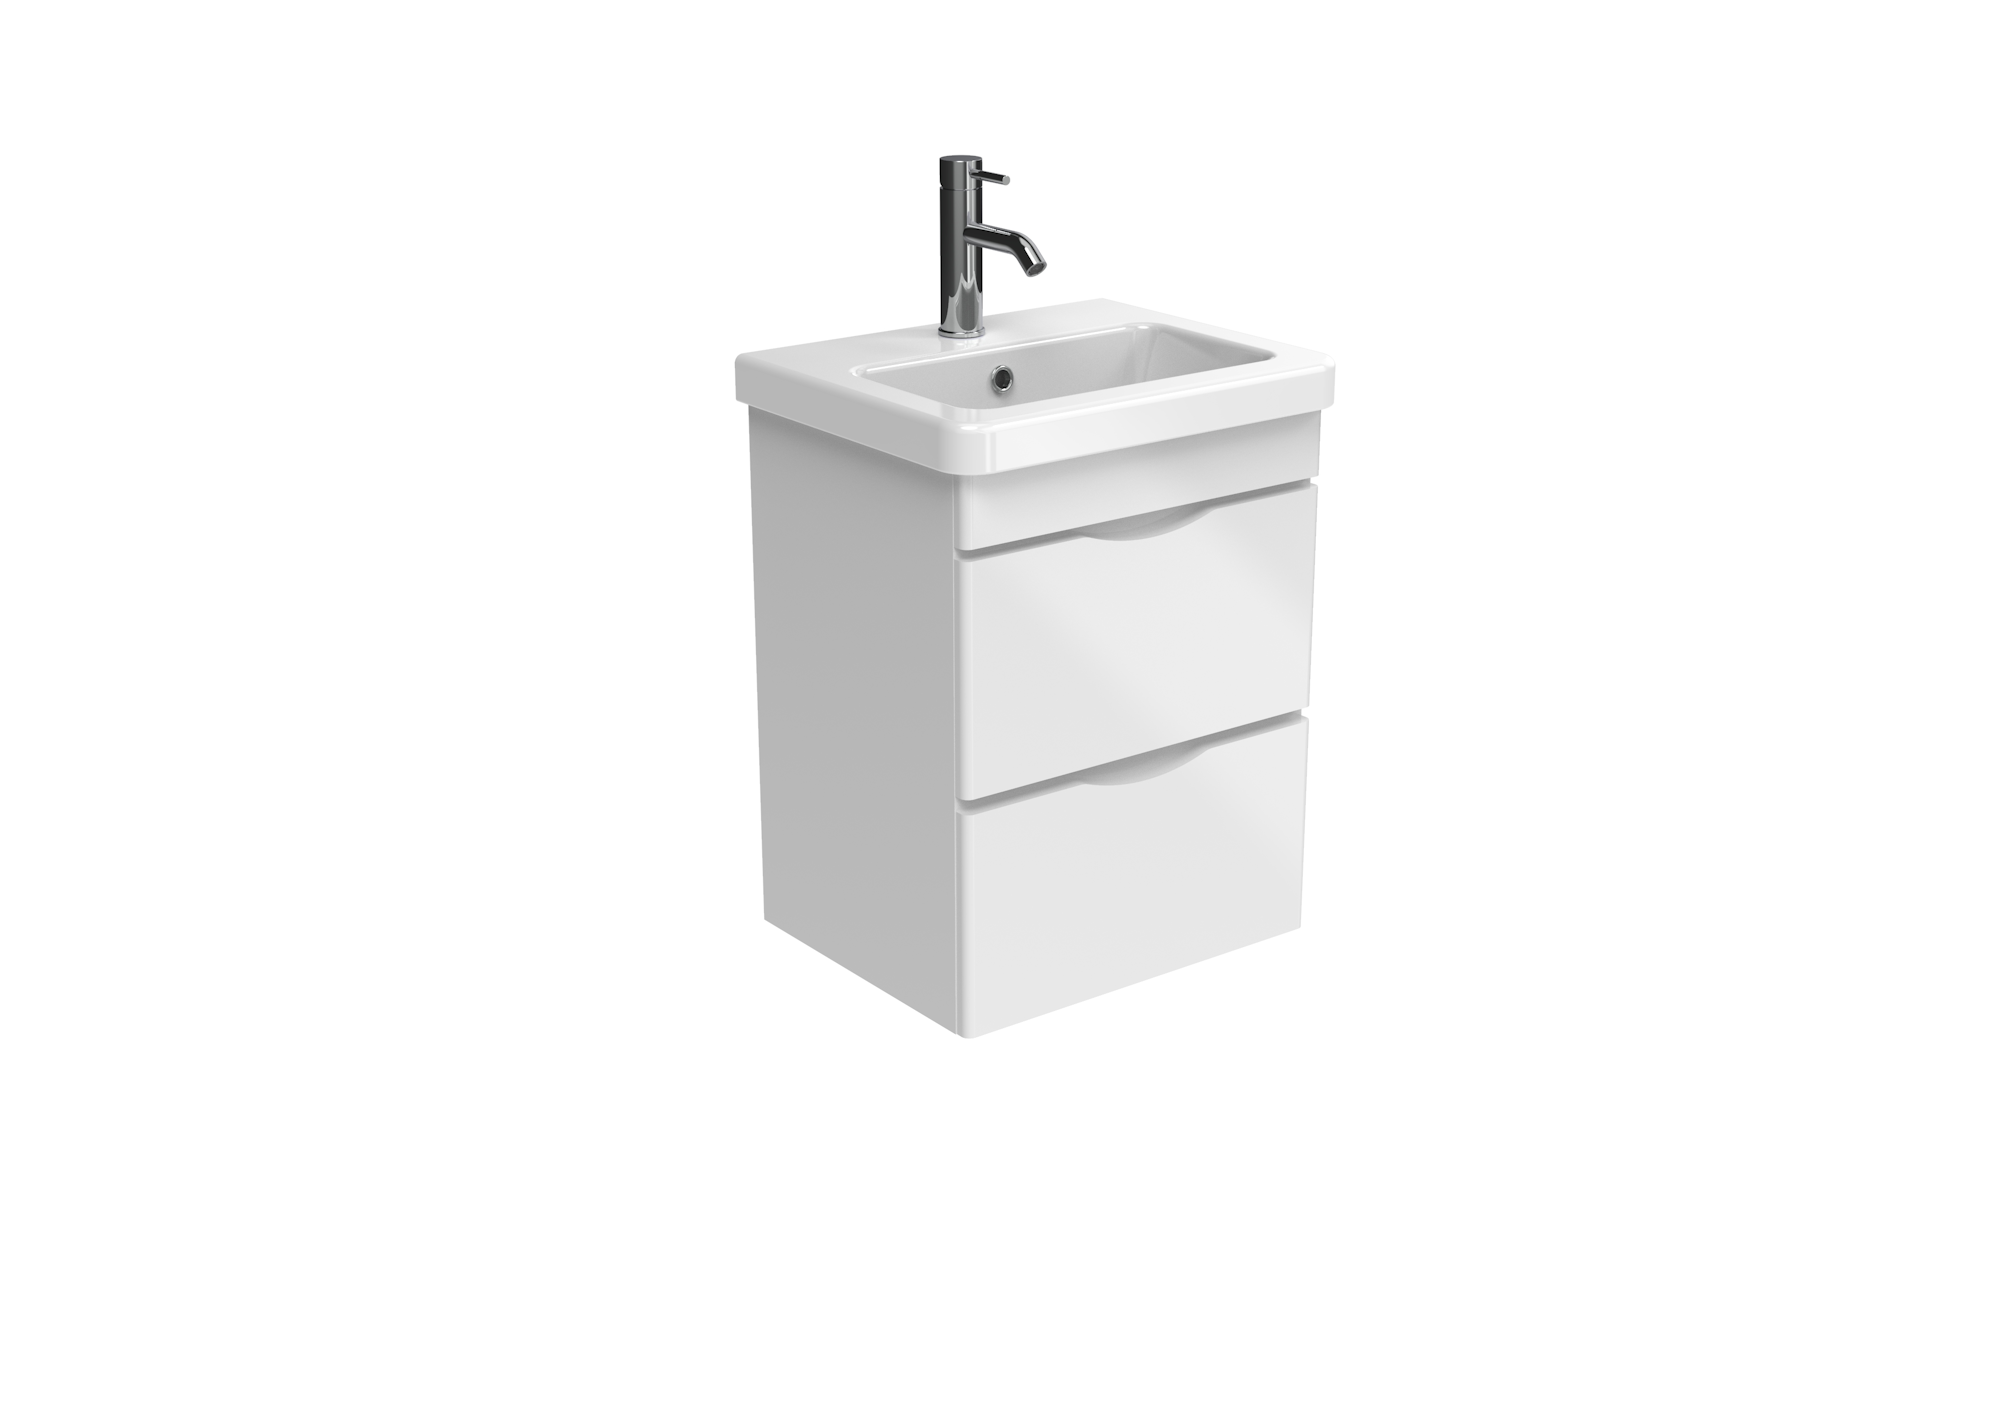 INDIGO 50cm 2 drawer wall mounted unit - Gloss White